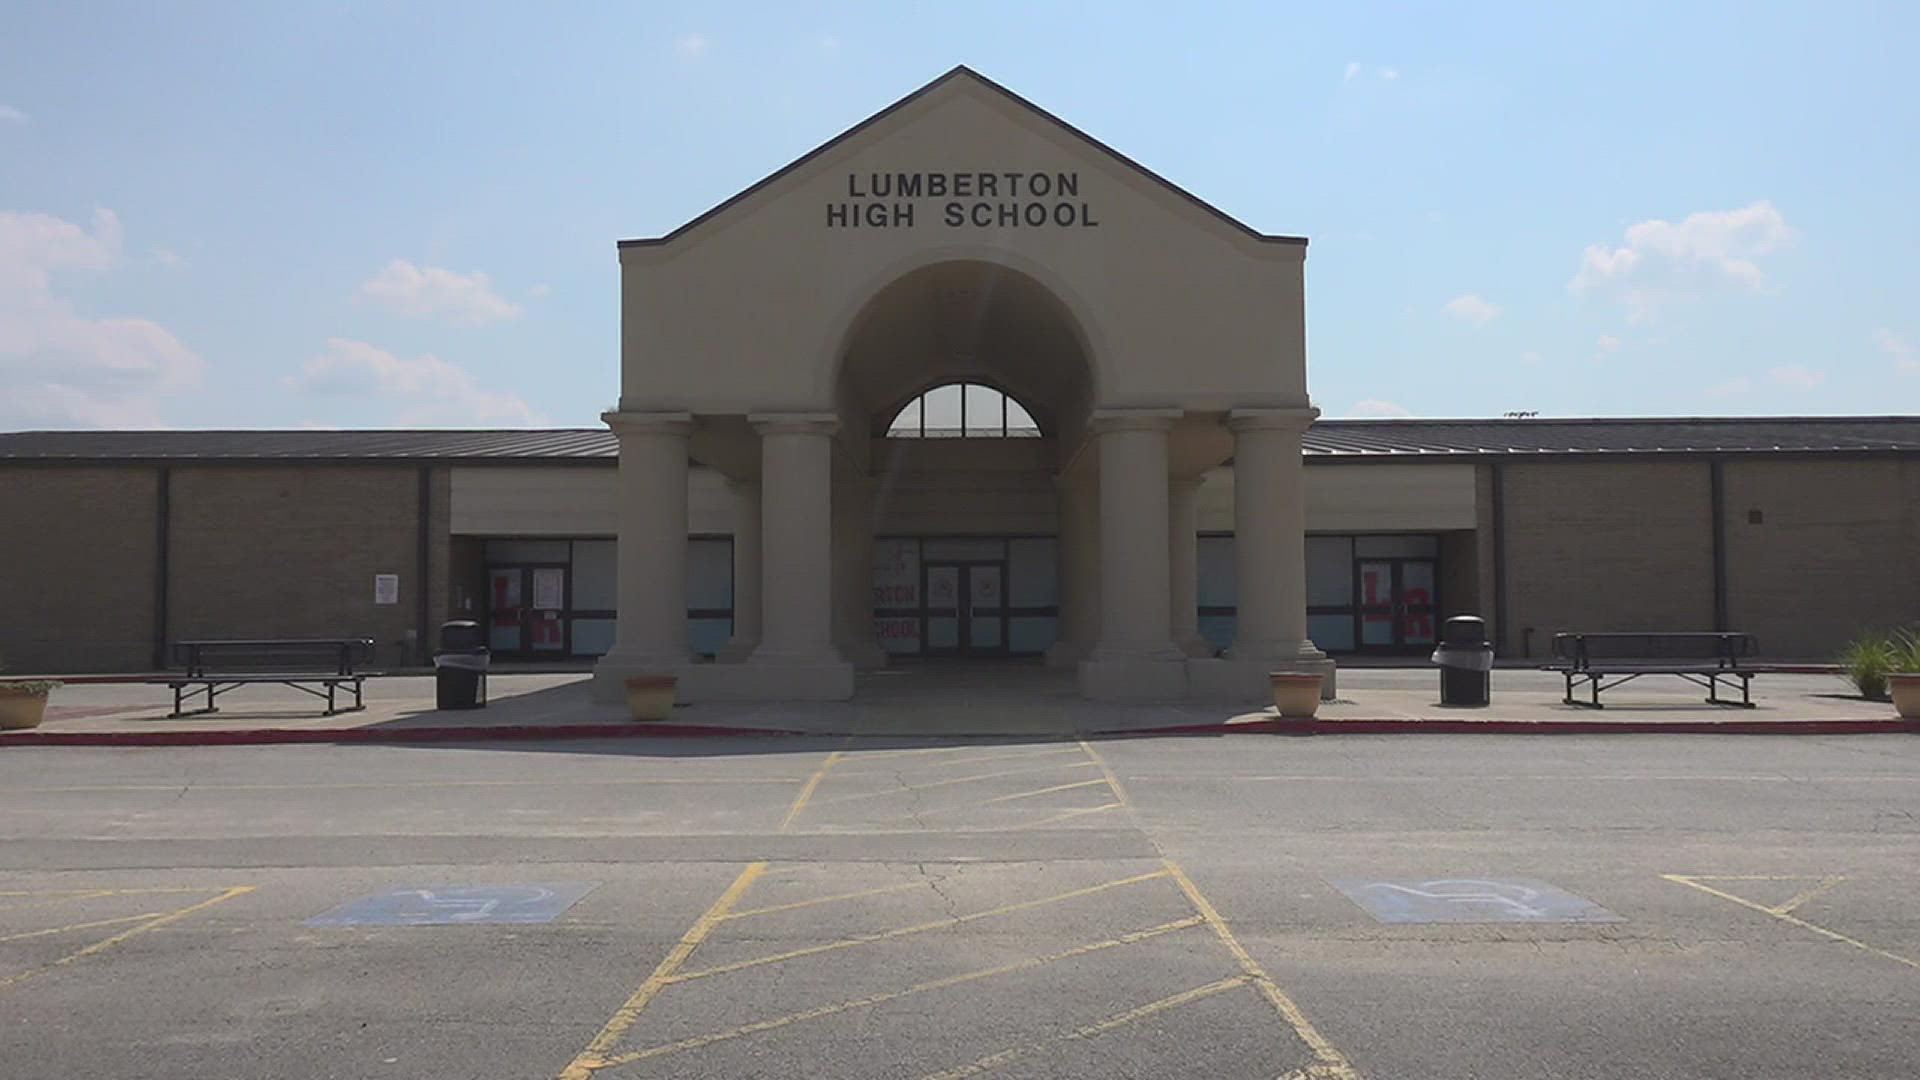 Lumberton High School